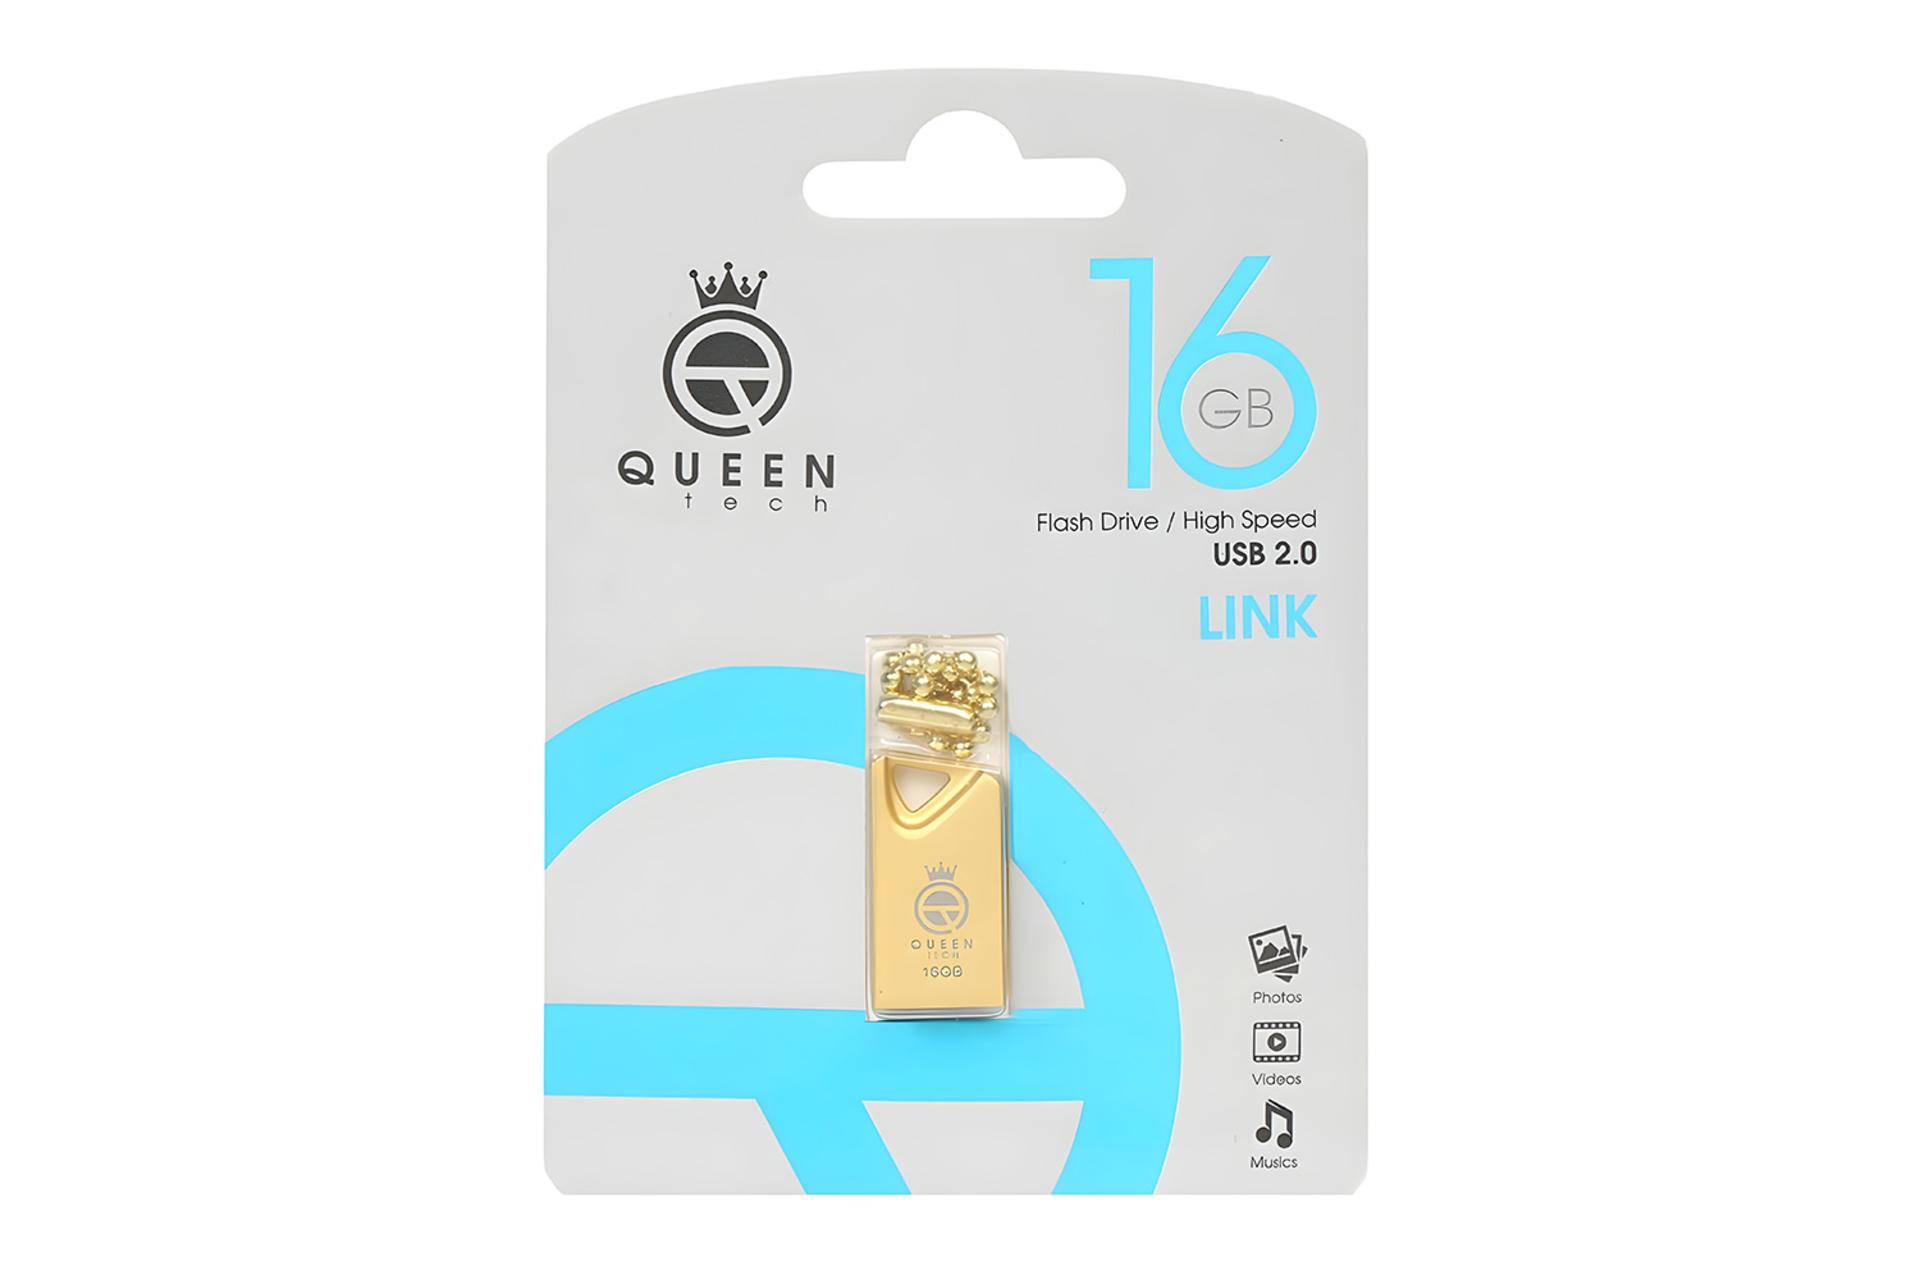 جعبه فلش مموری کوئین تک Queen Tech LINK 16GB USB 2.0